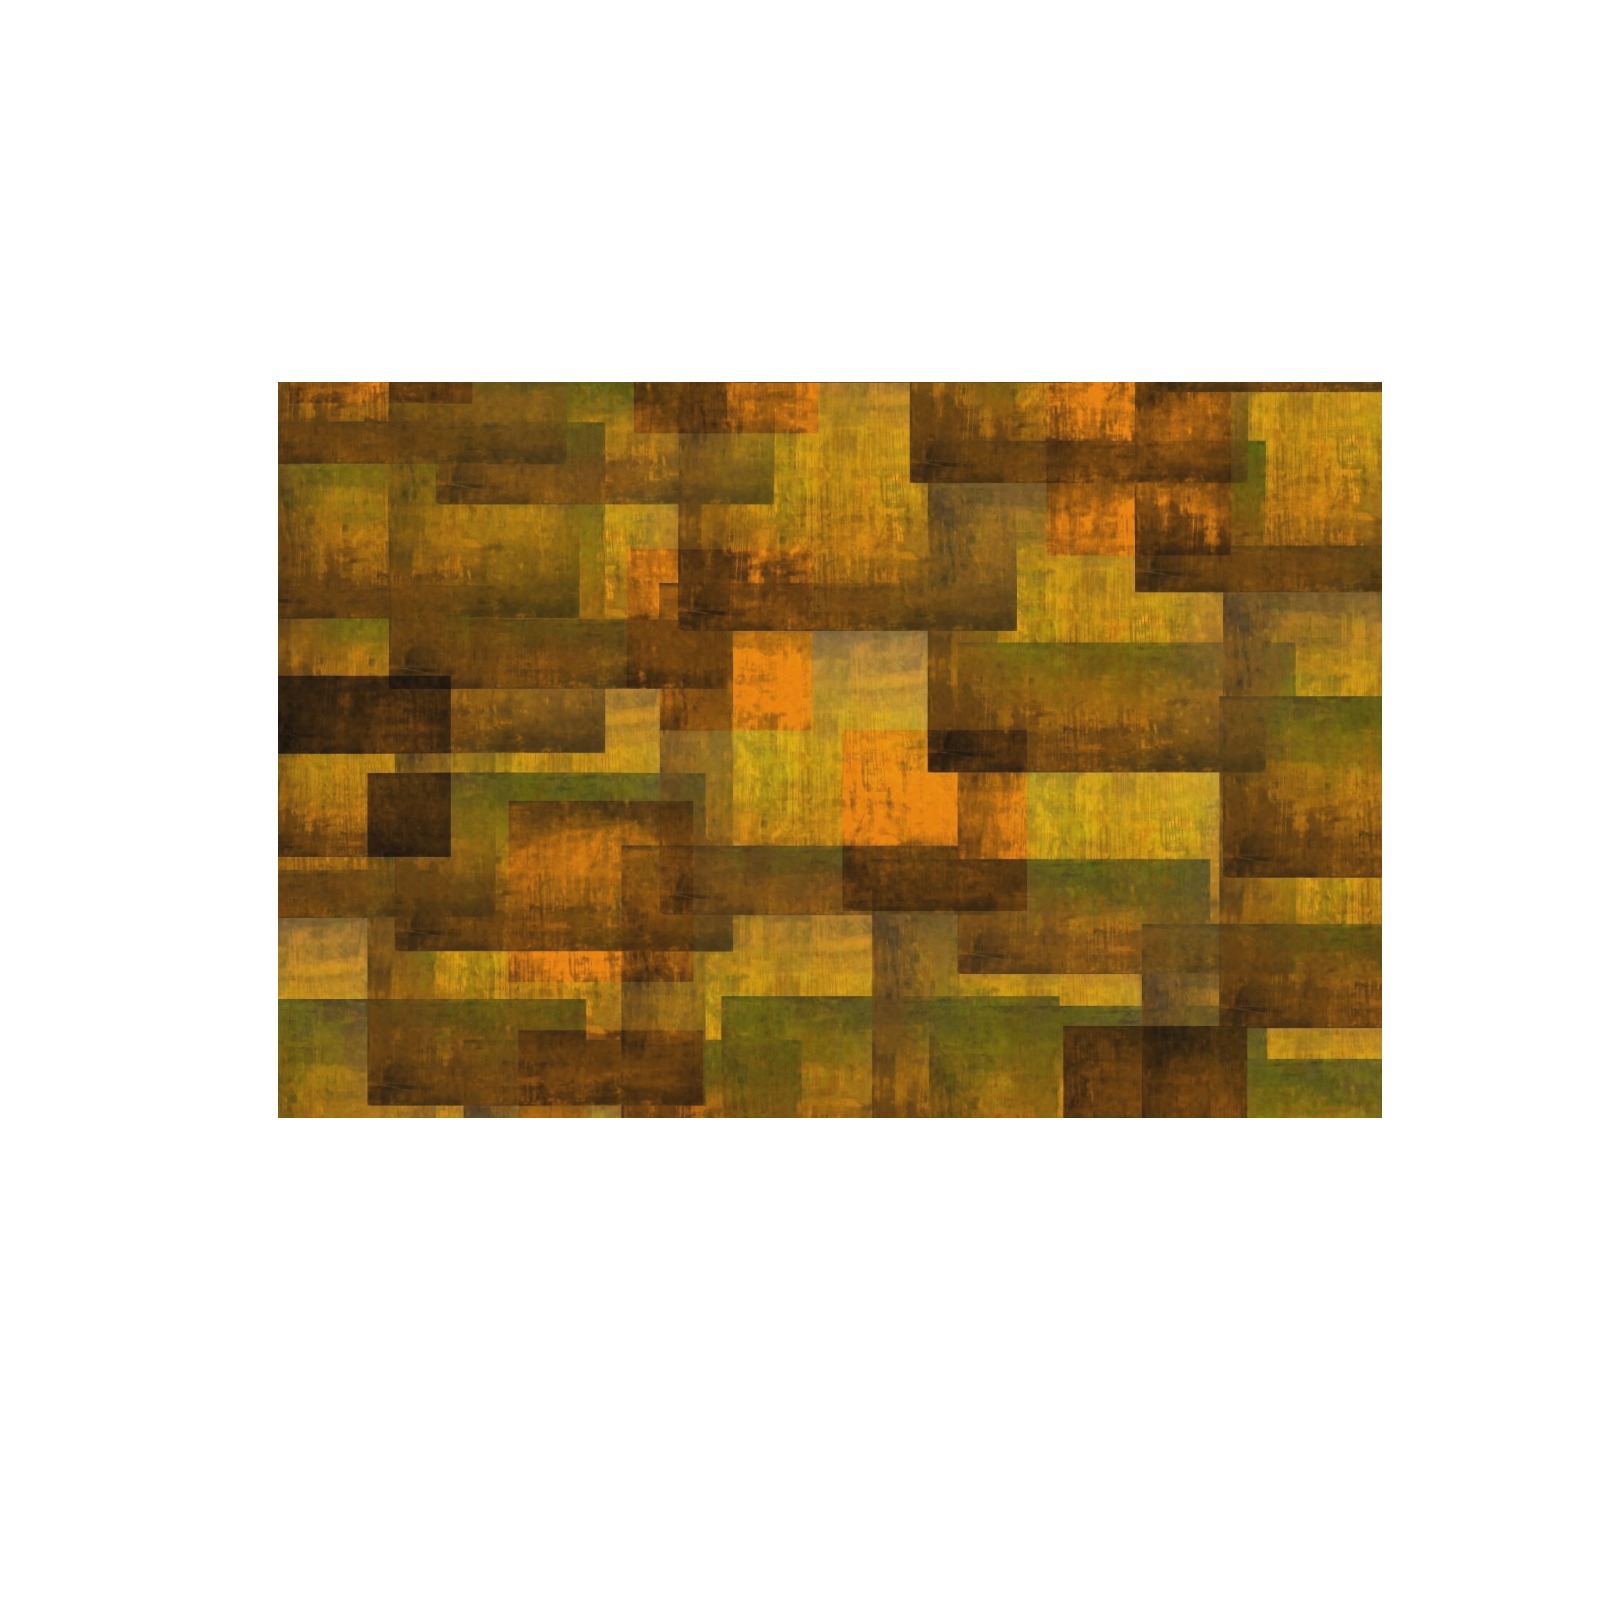 pixels2 brown Frame Canvas Print 48"x32"